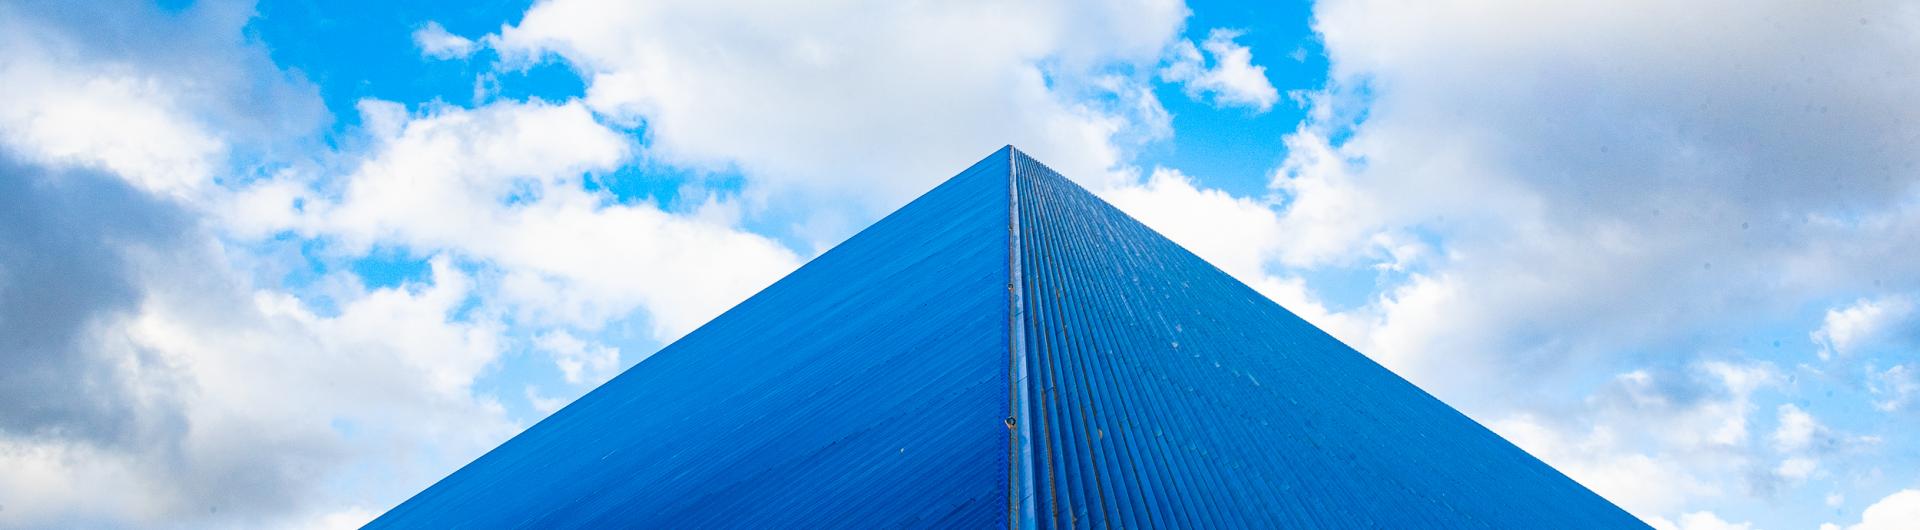  Blue Walter Pyramid and Sky